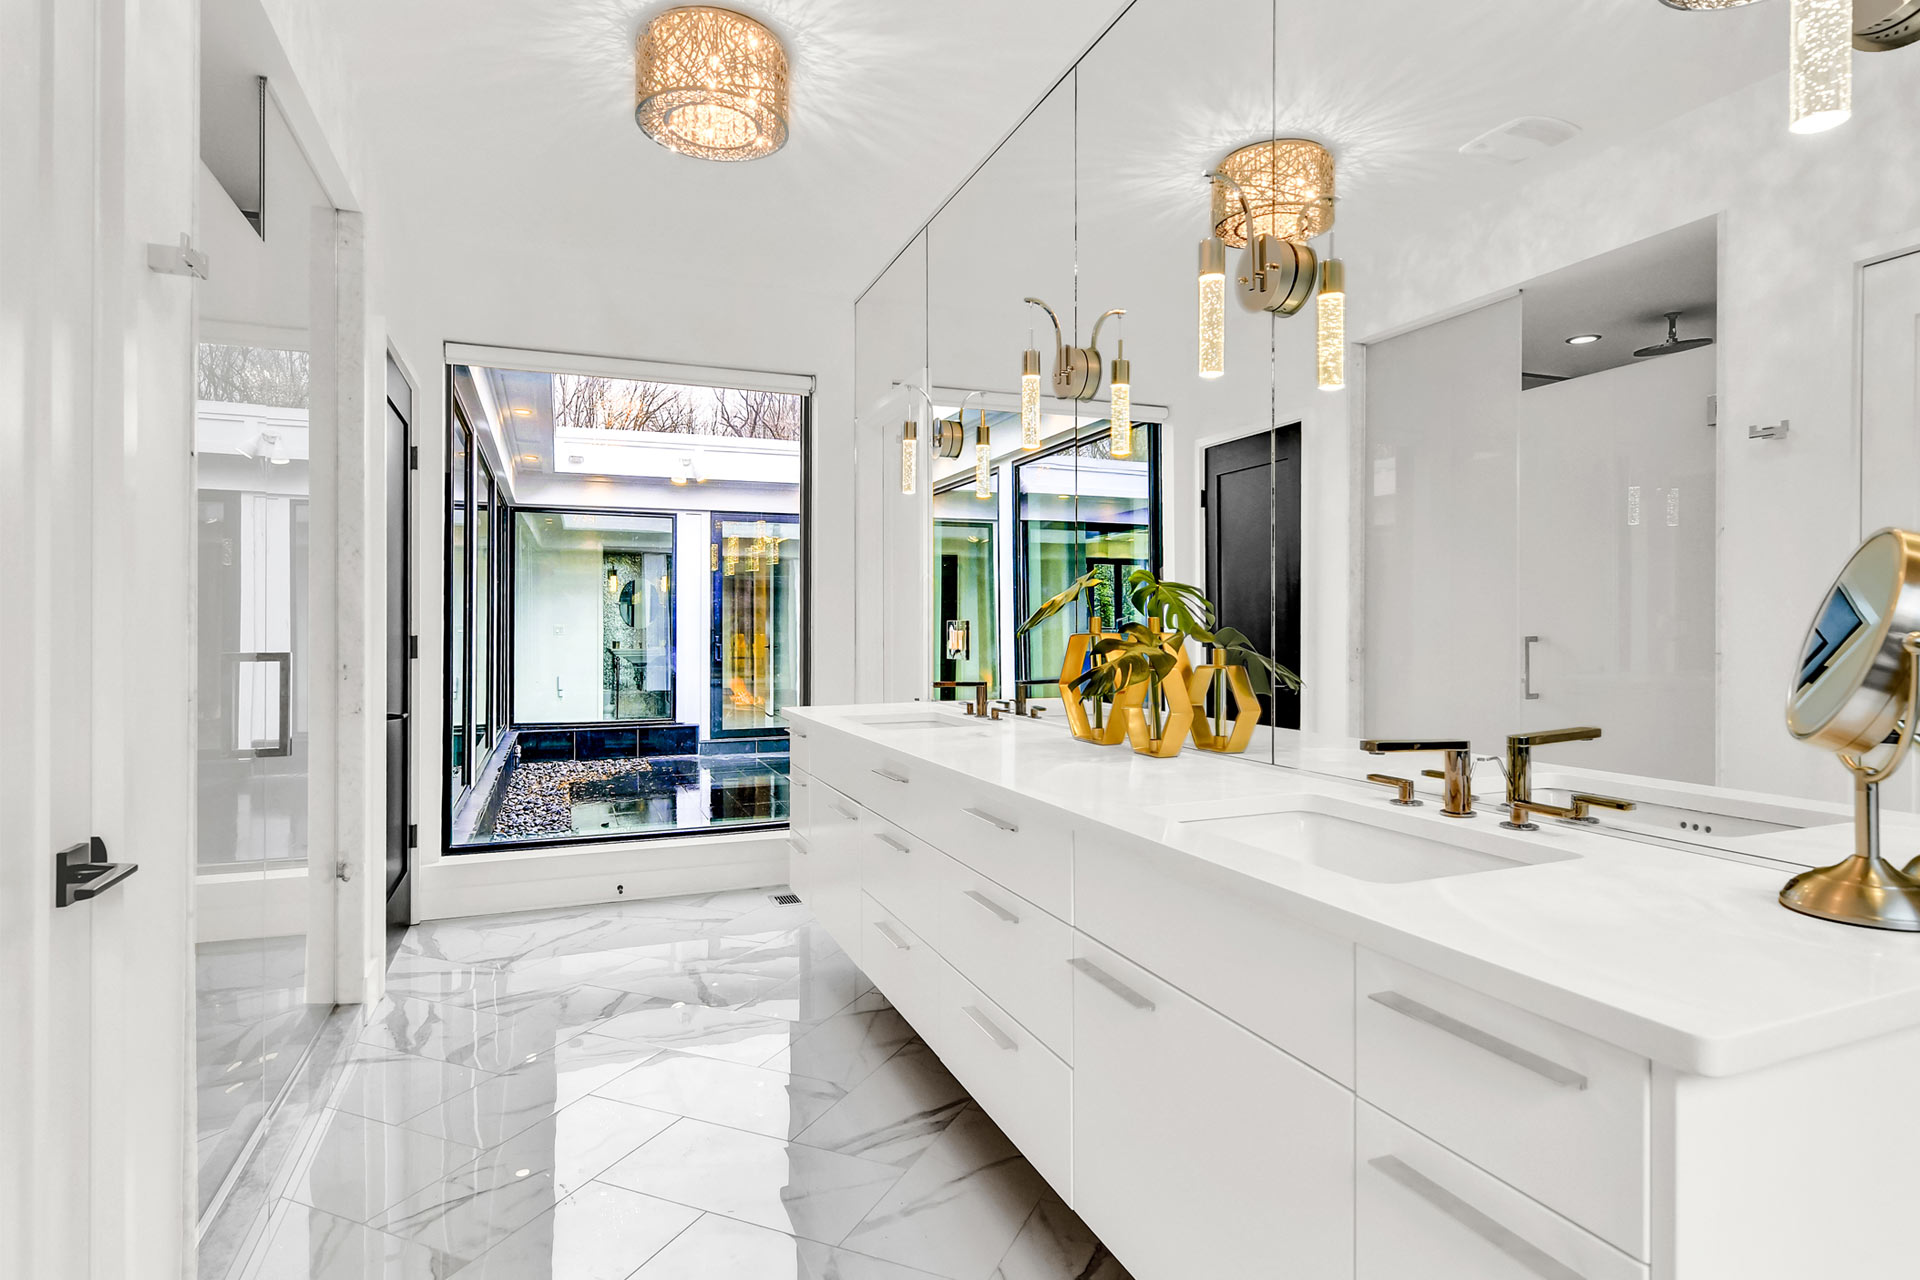 Bathroom renovation to create high-style modern aesthetic